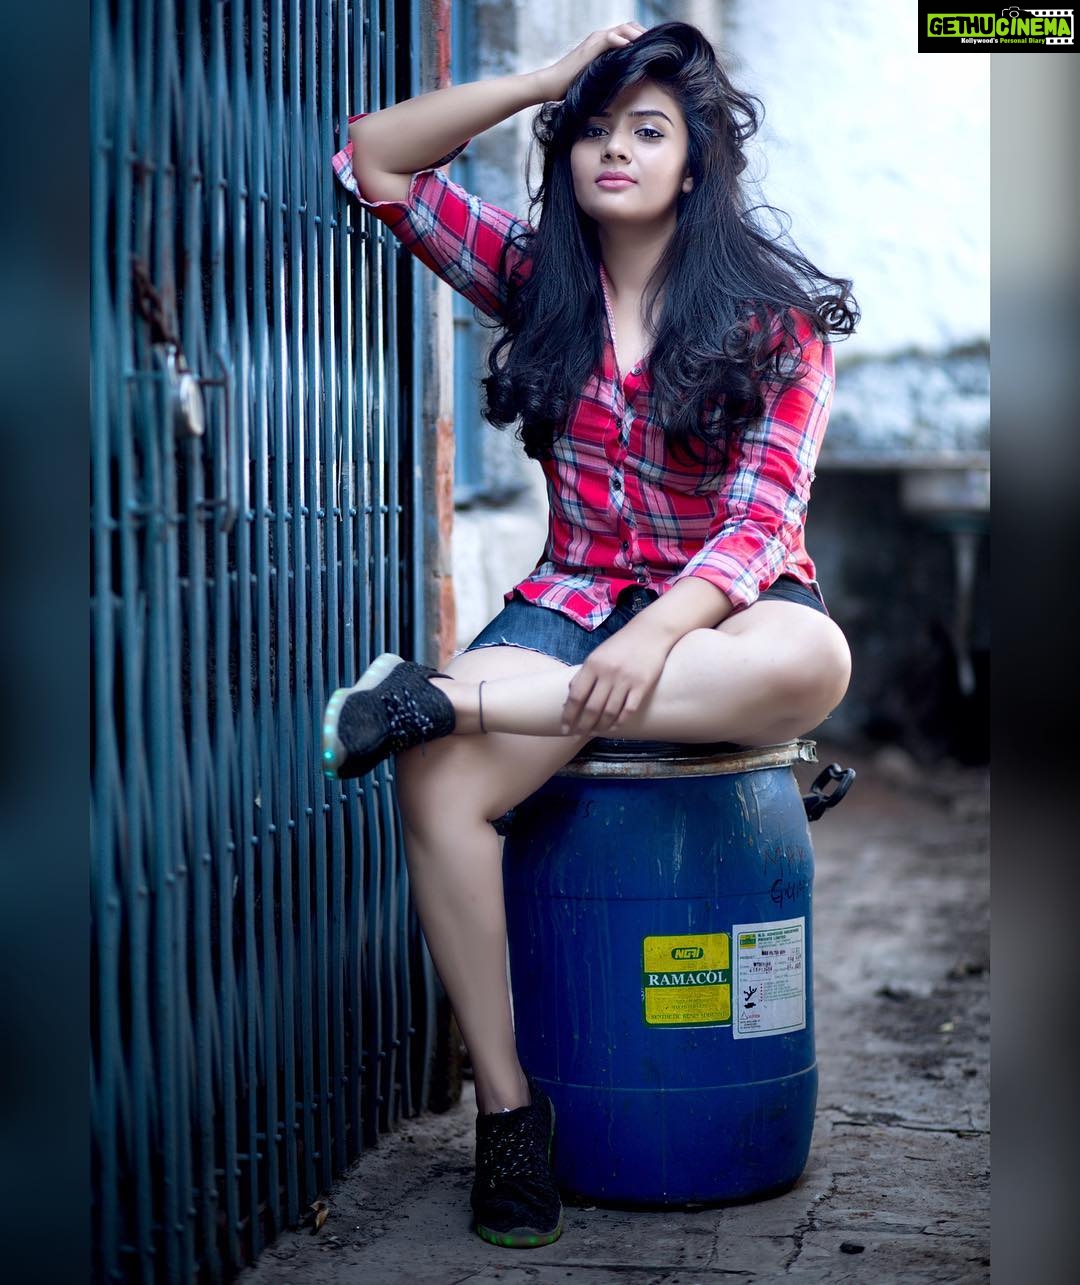 Srimukhi Hot Xnxx Videos - Actress Sreemukhi Instagram Photos and Posts April 2017 - Gethu Cinema